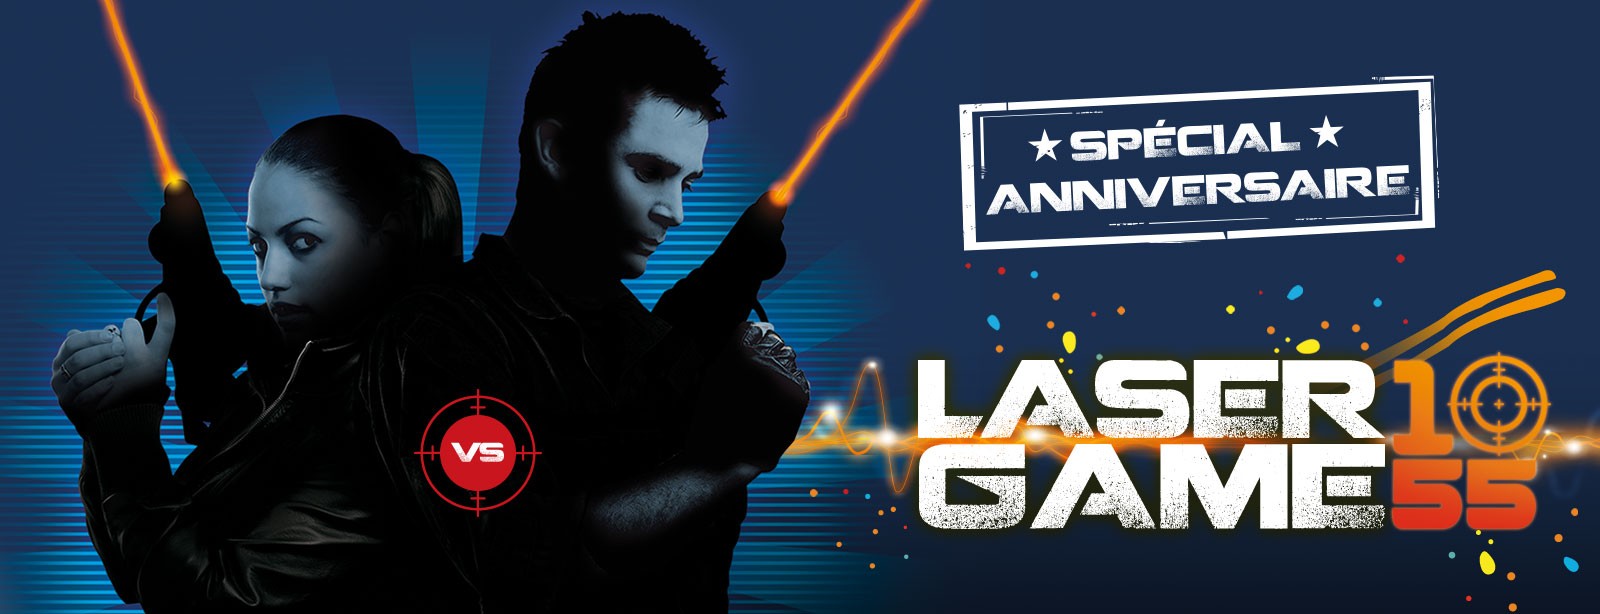 Carte invitation anniversaire à imprimer laser game